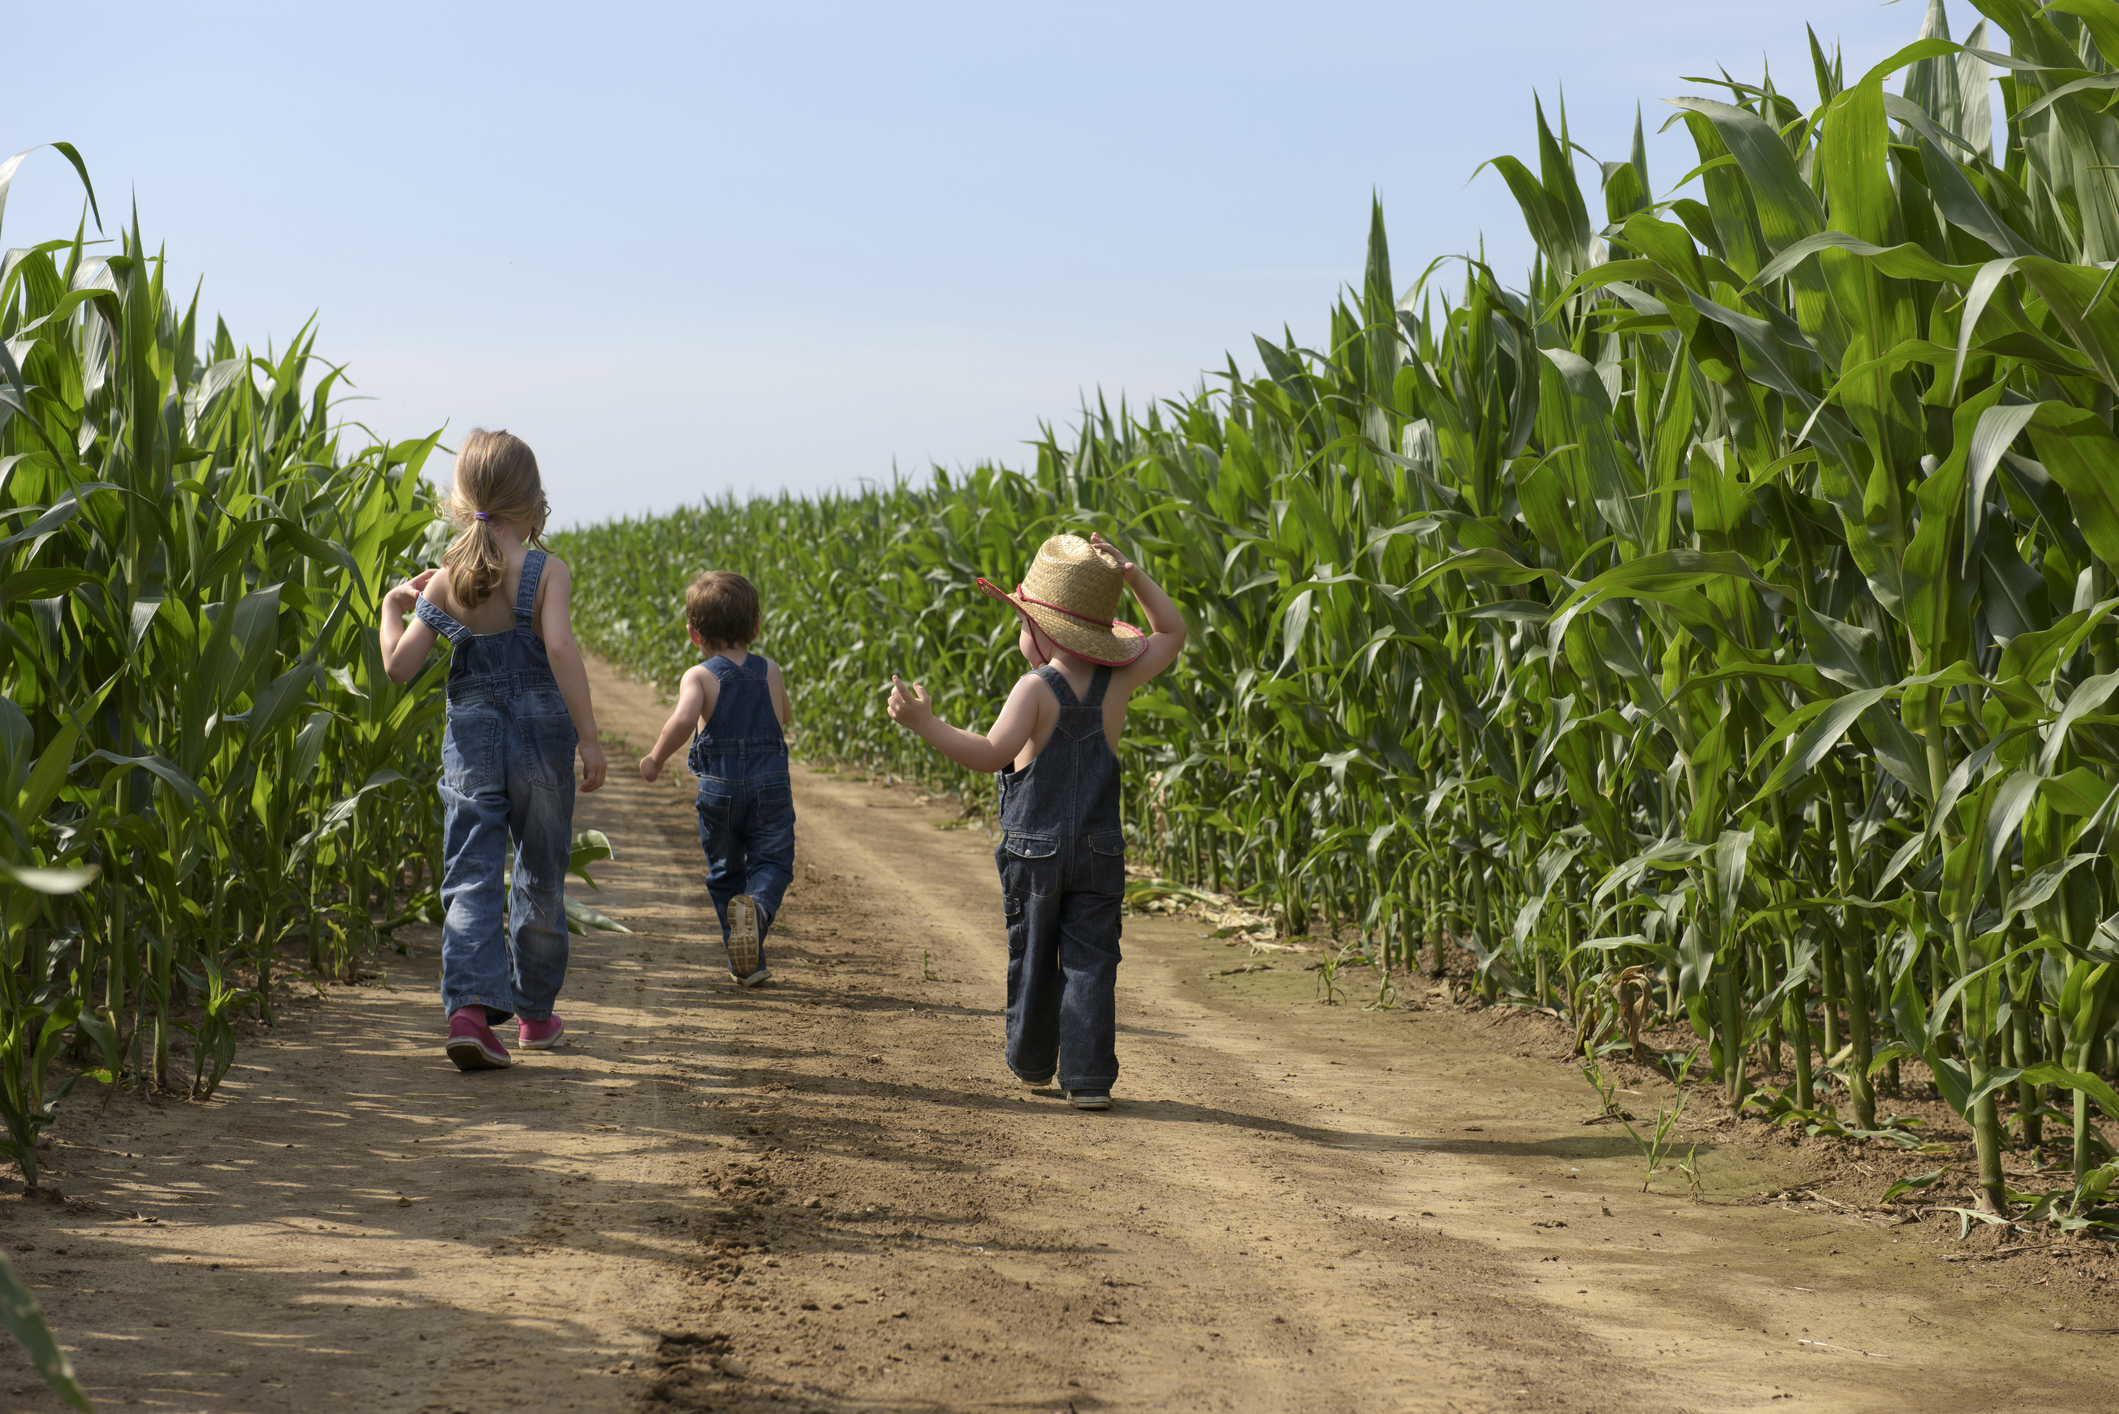 Siblings walking in the fields (Photo: iStock - Dave Bergmeier)